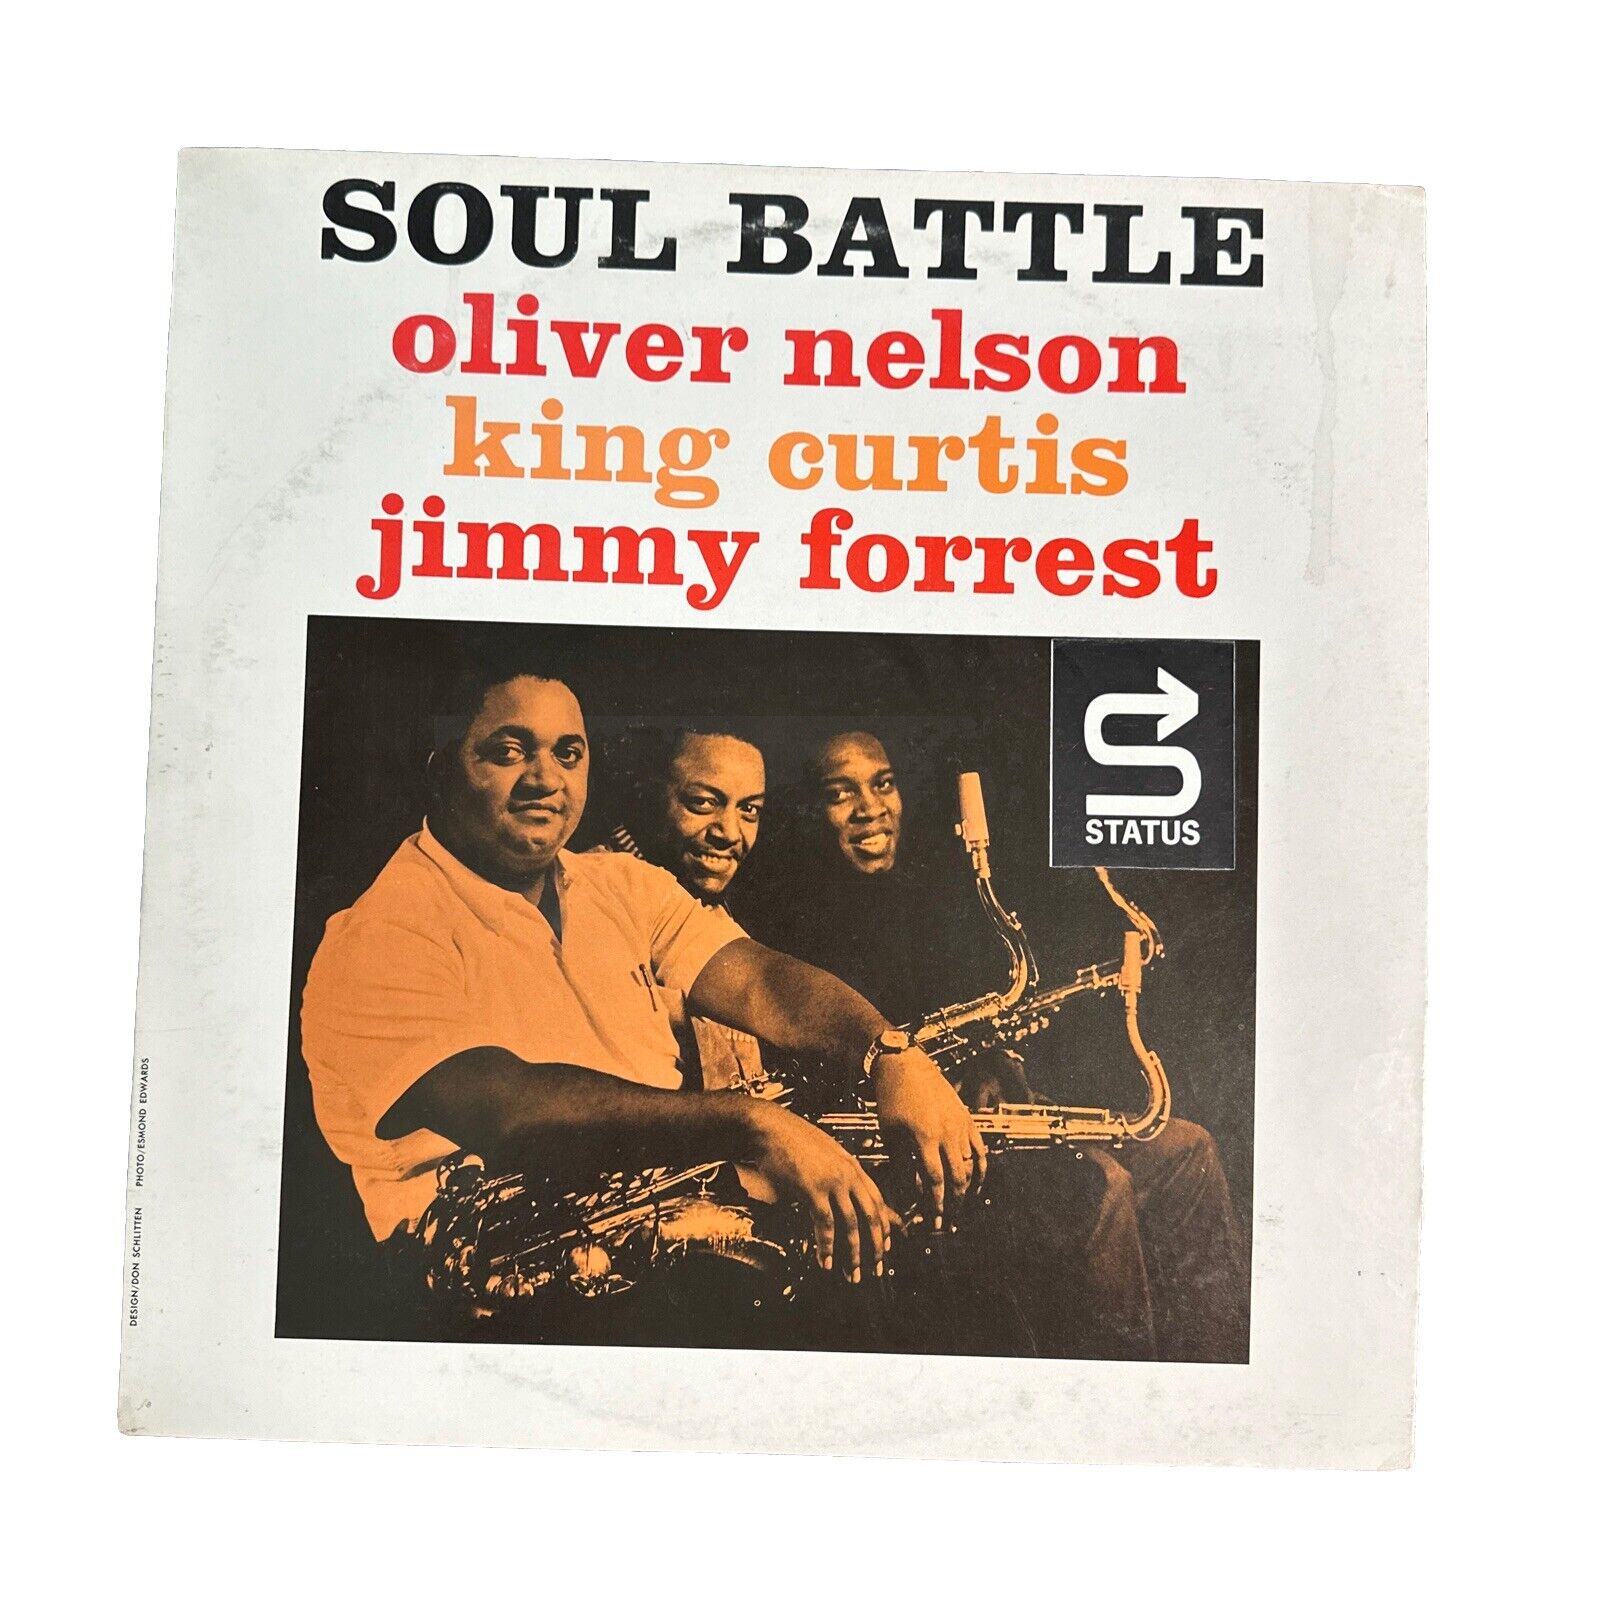 Soul Battle Oliver Nelson King Curtis Jimmy Forrest. Vinyl LP Status 7223